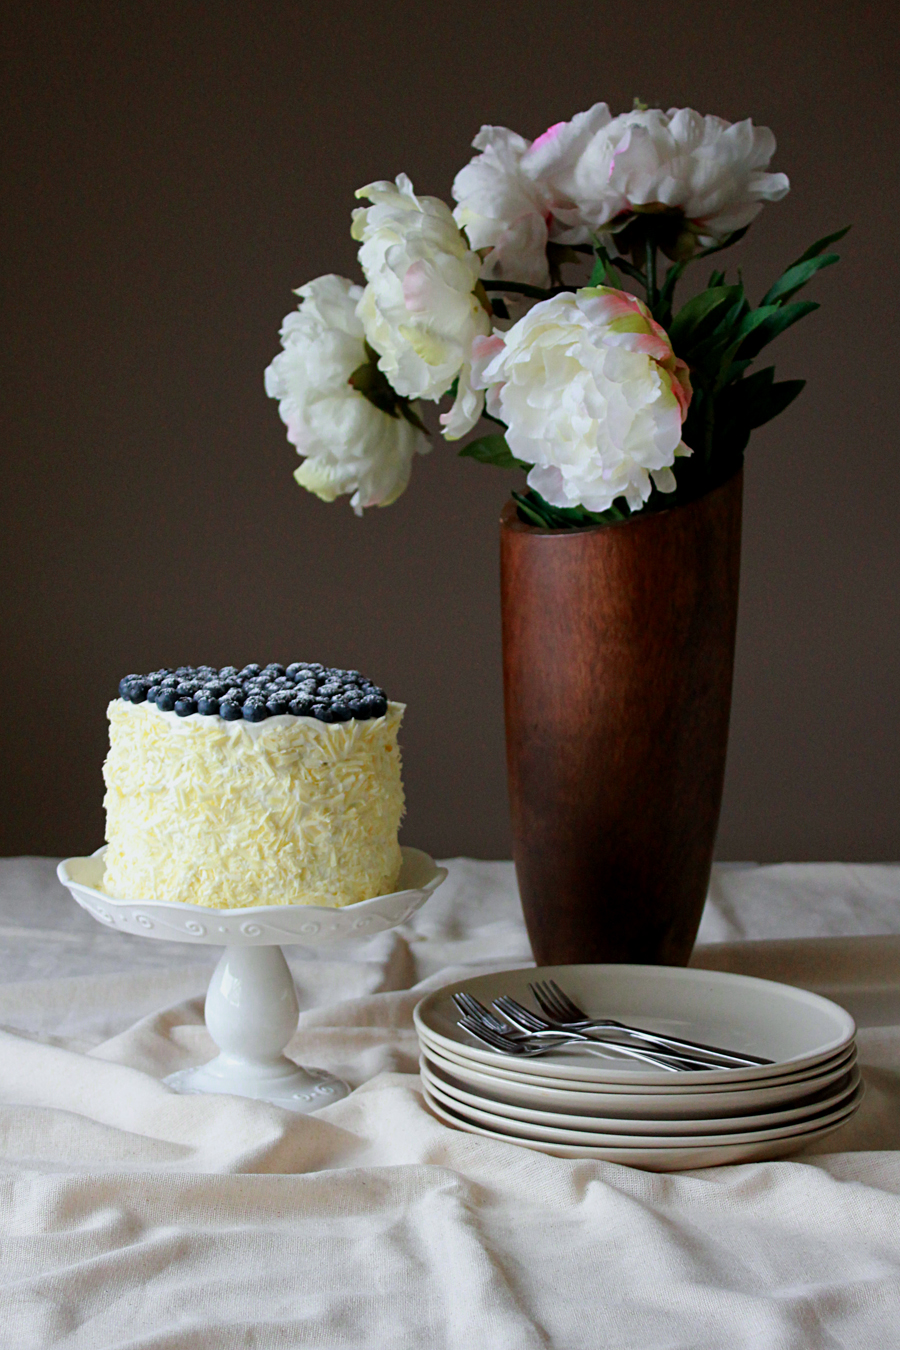 lemon blueberry and white chocolate cream cake